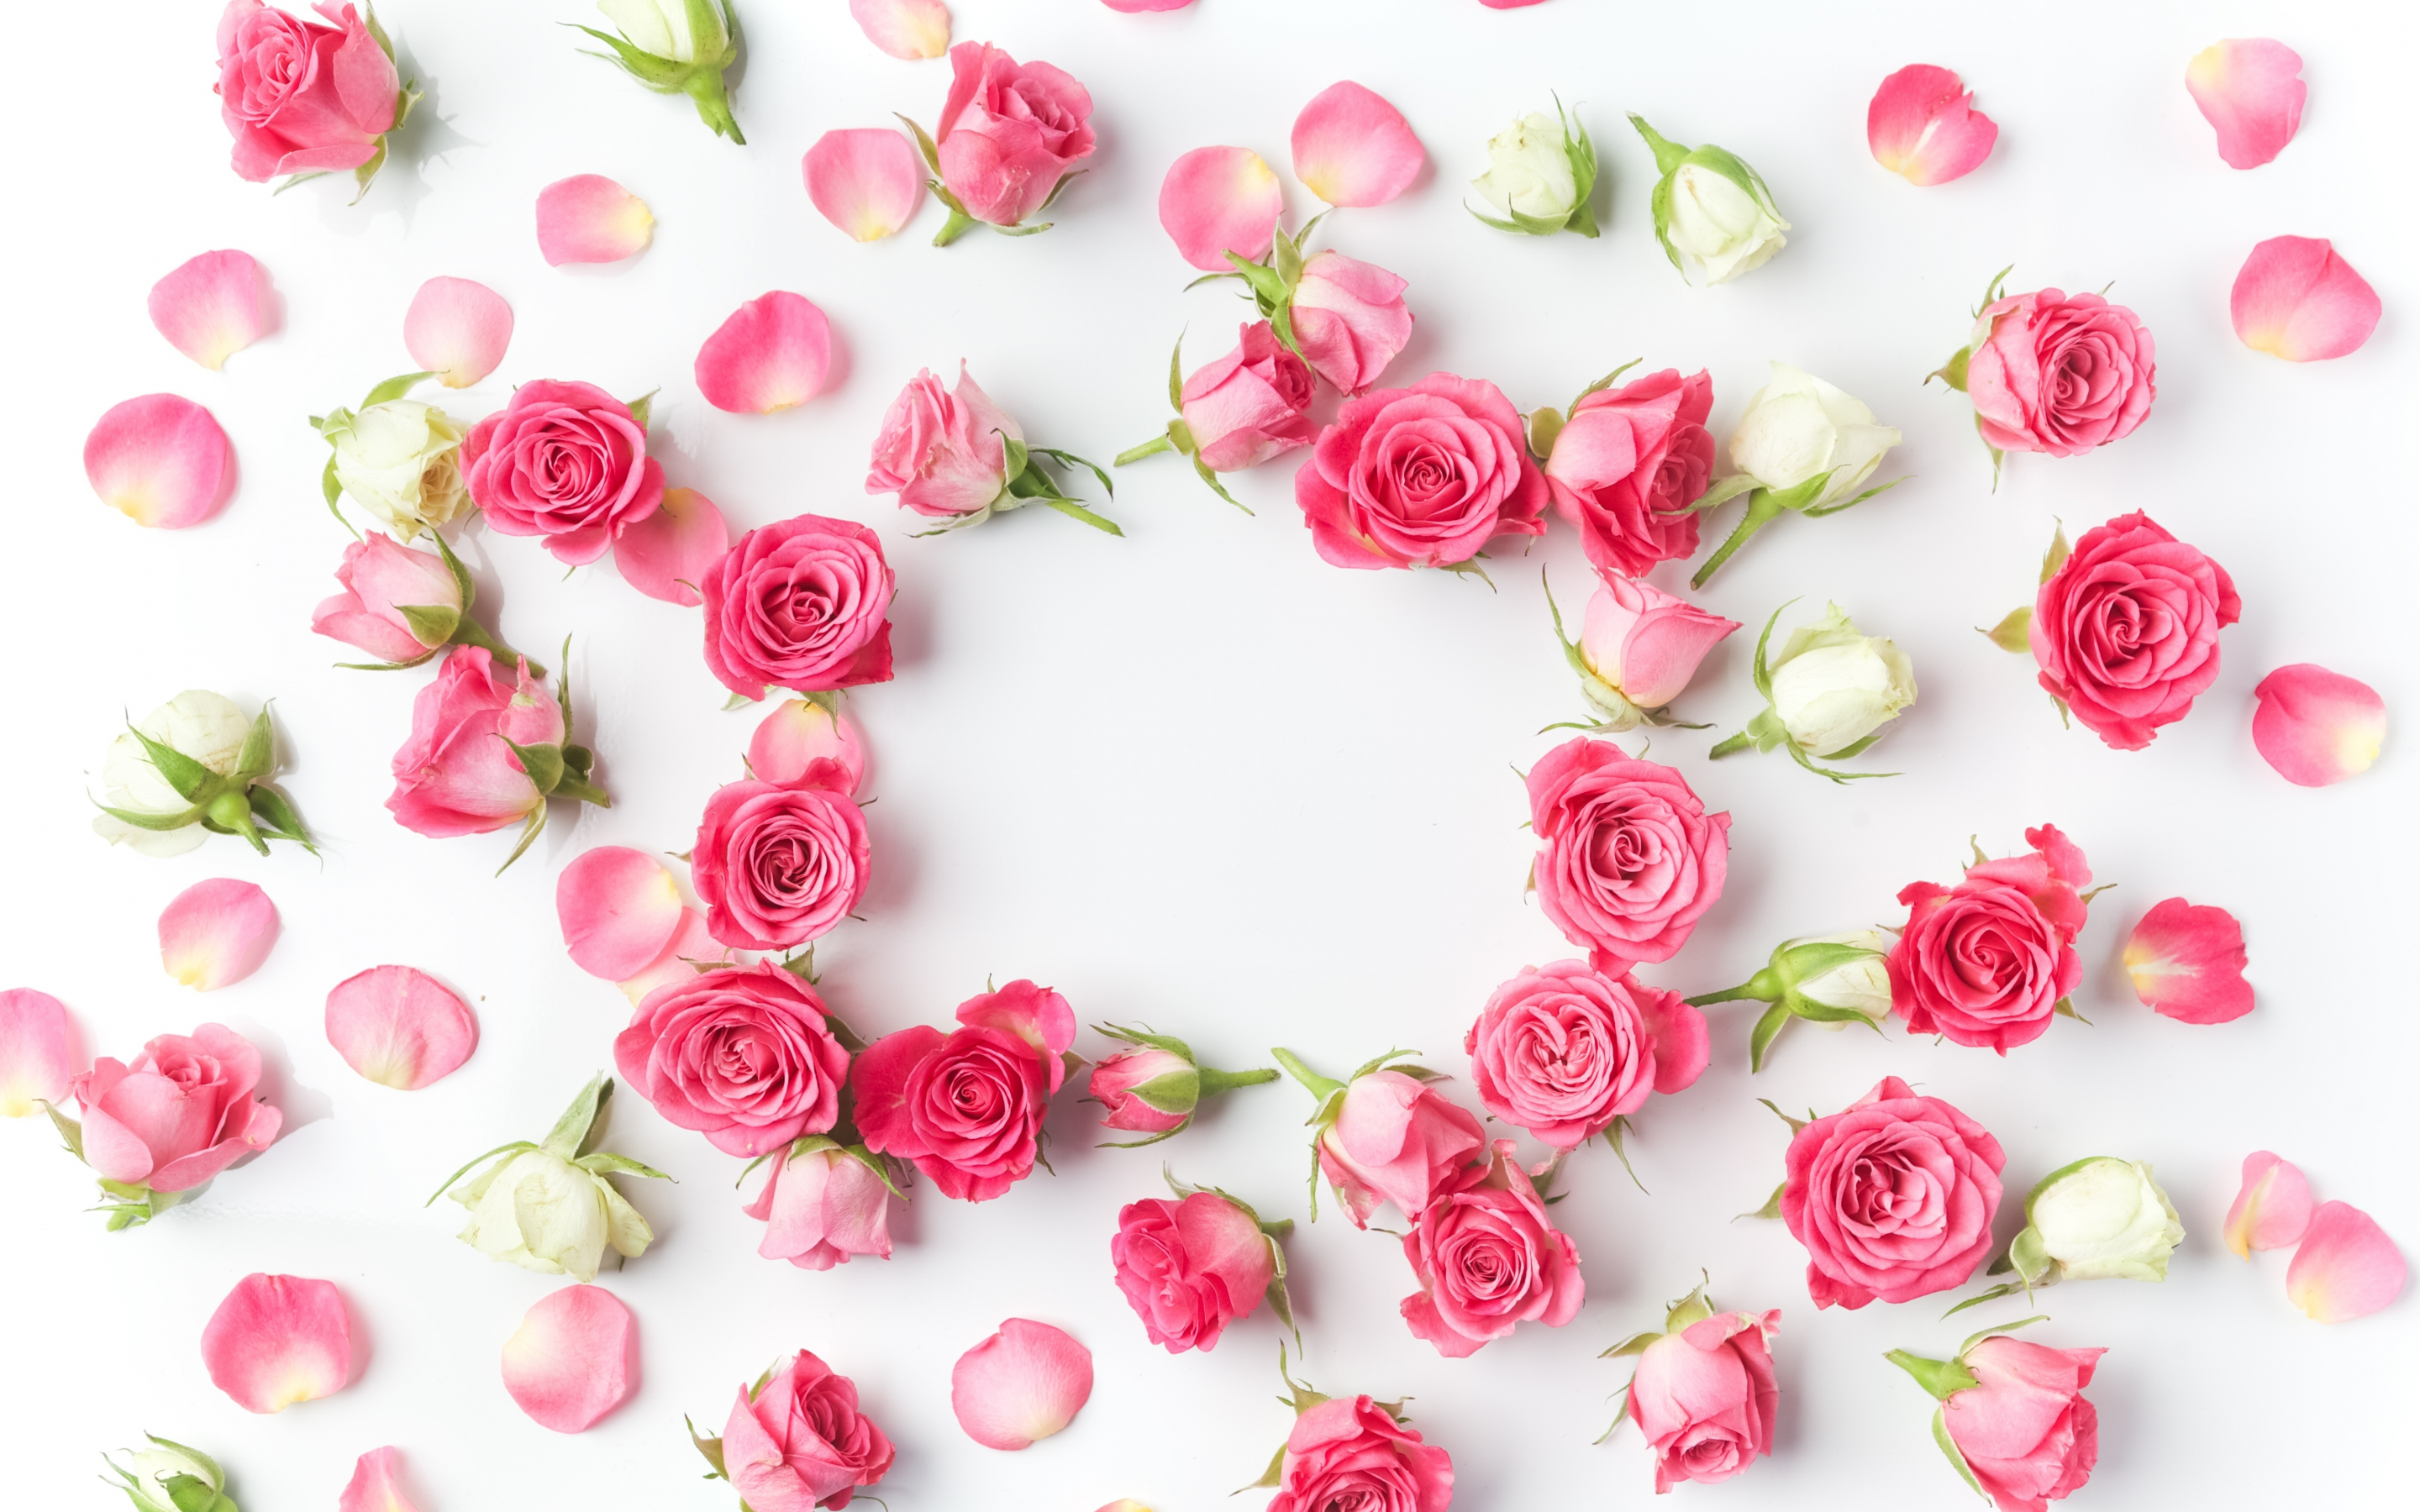 Flowers, petals, pink roses, flowers, 2880x1800 wallpaper